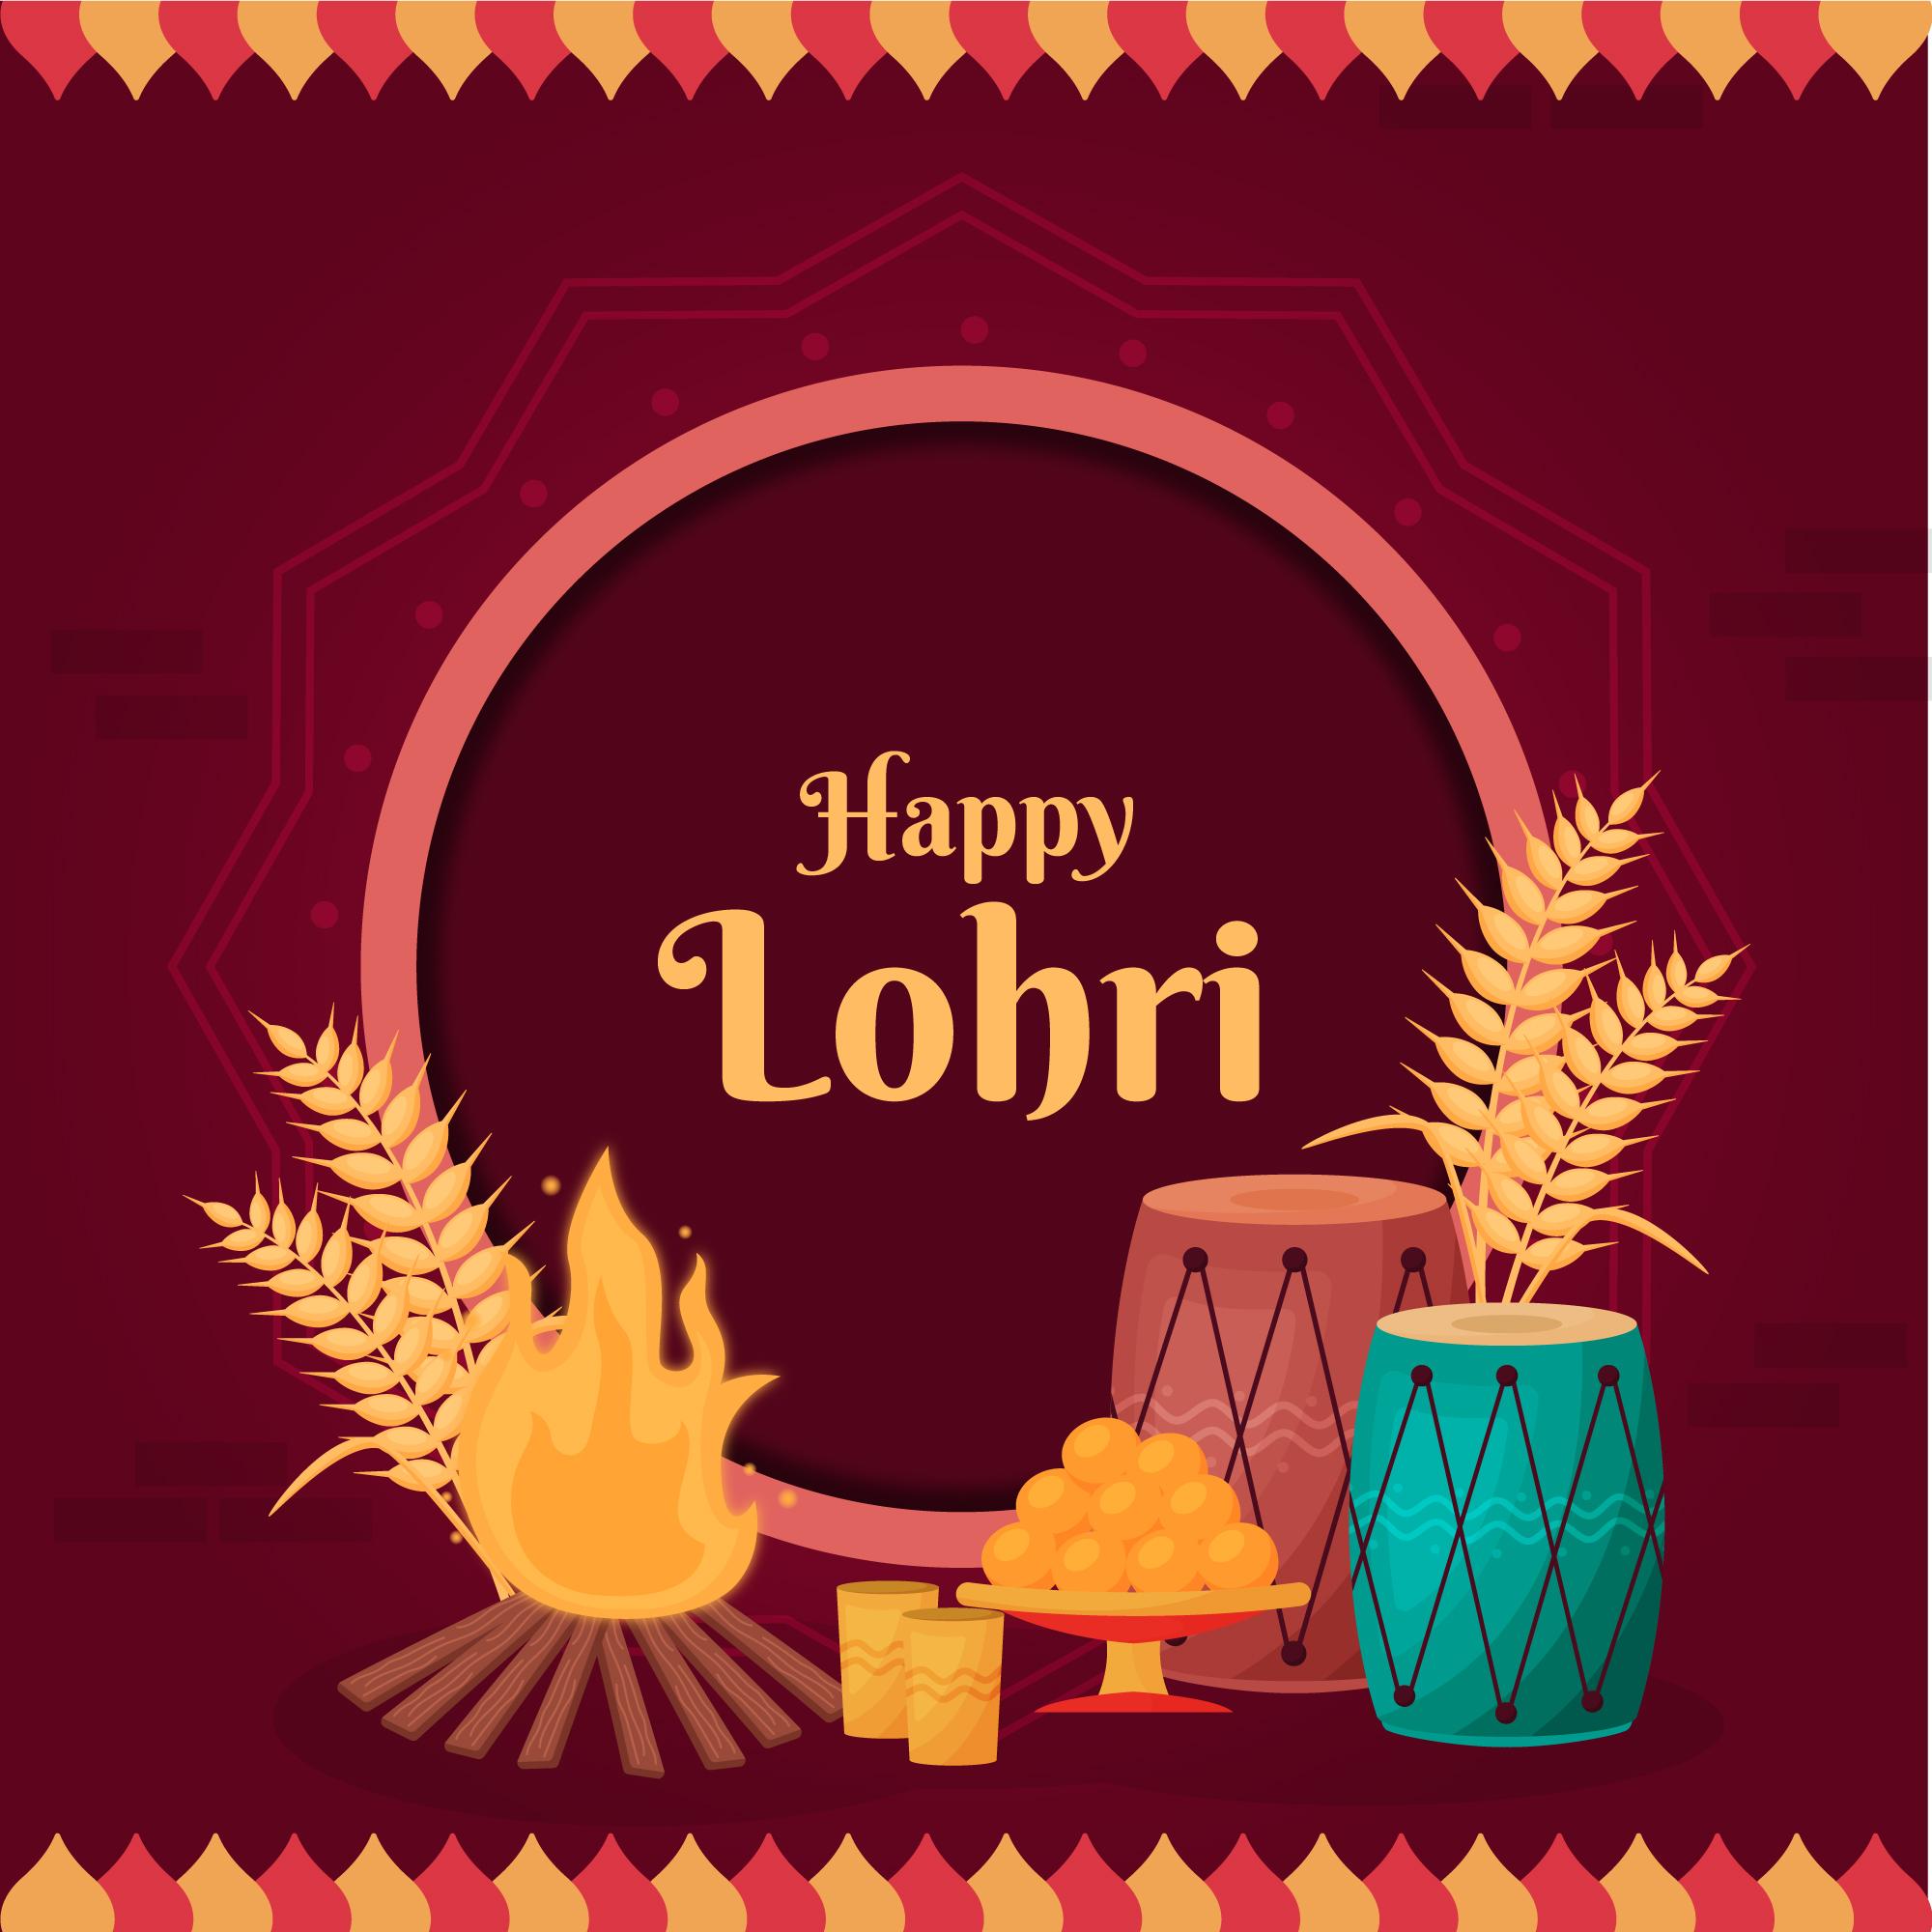 Happy Lohri 2023 Images & Photos Free Download - Image Diamond